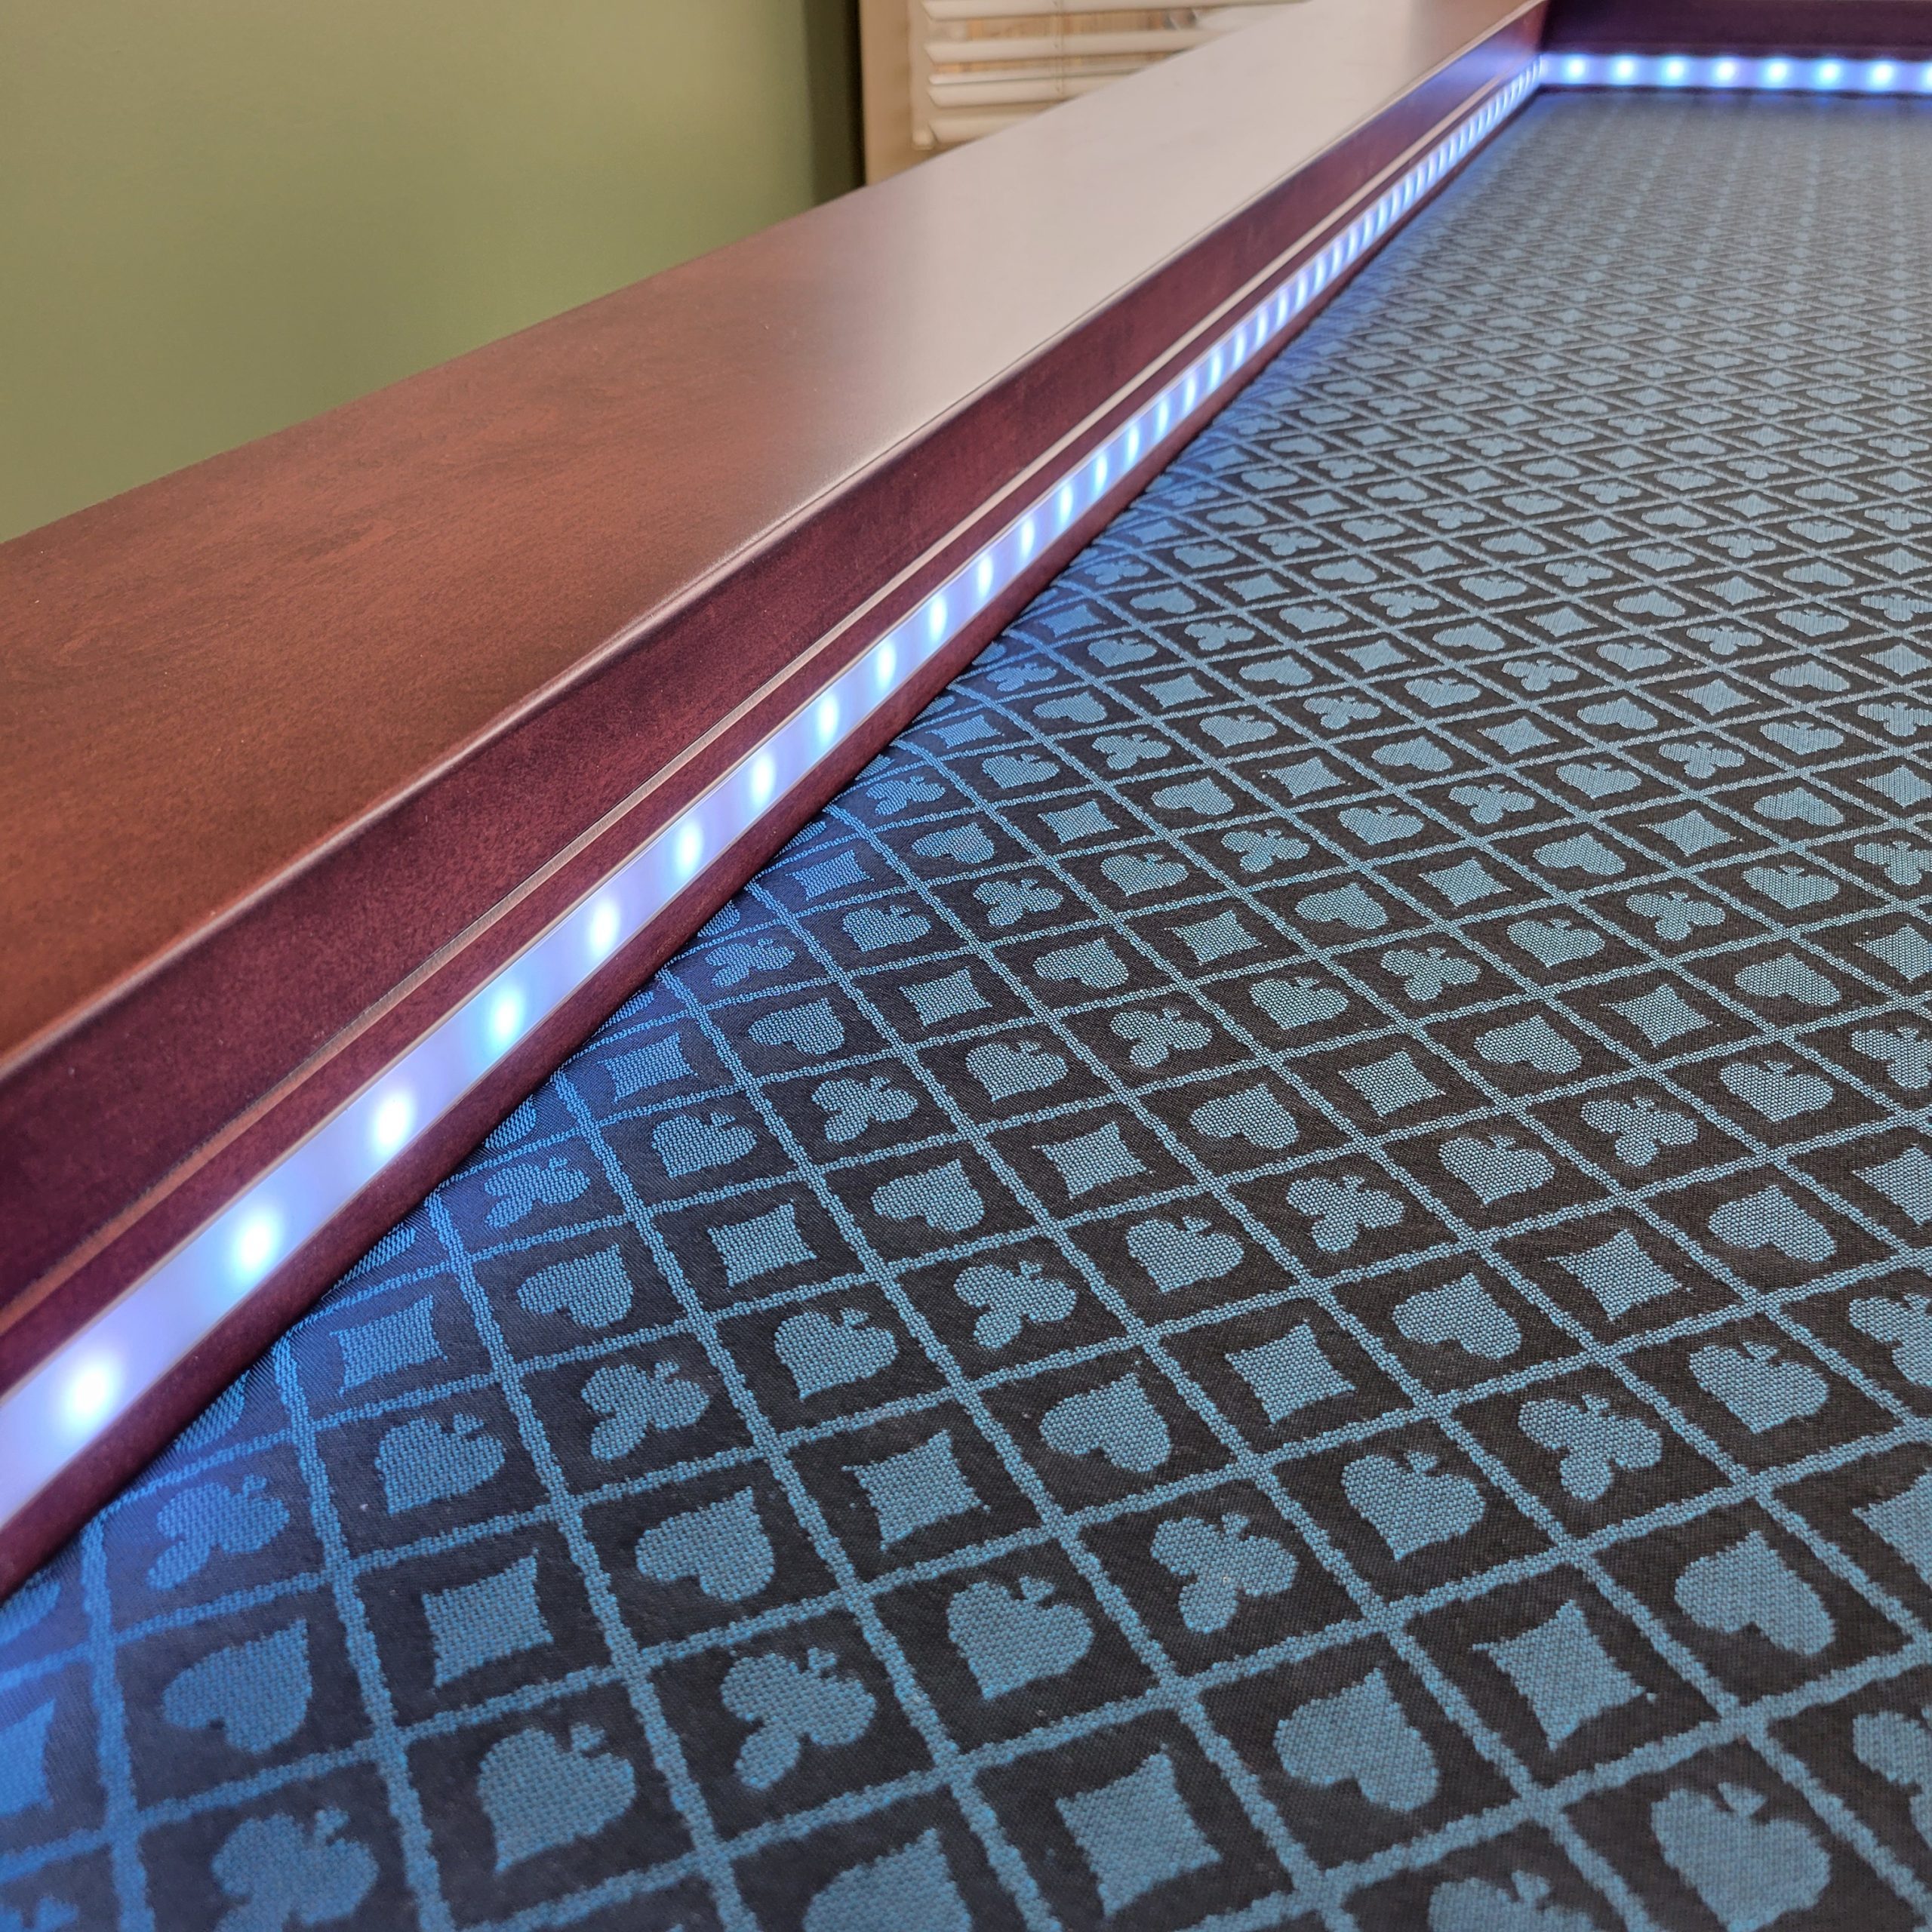 RGB lighting on board game table